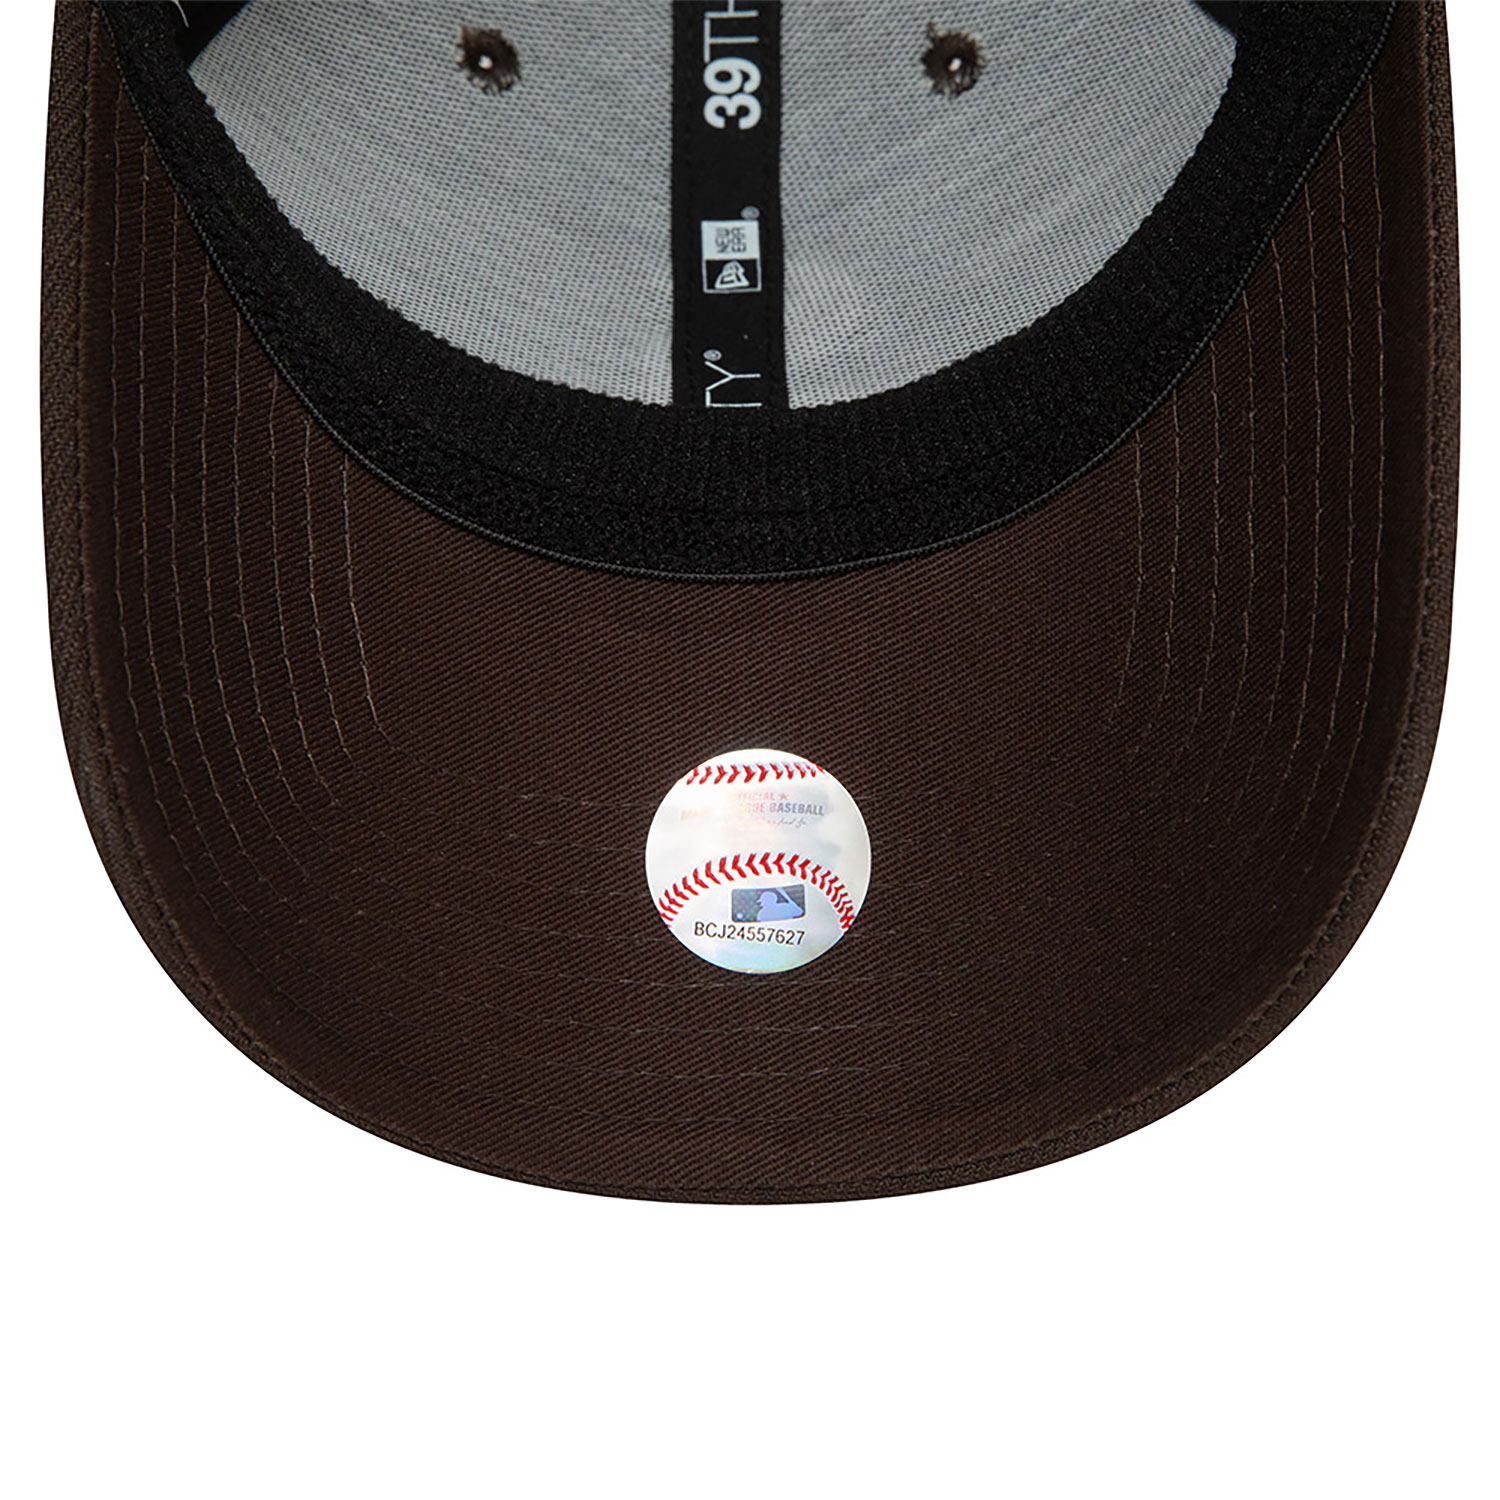 Chicago White Sox League Essential Dark Brown 39THIRTY Stretch Fit Cap